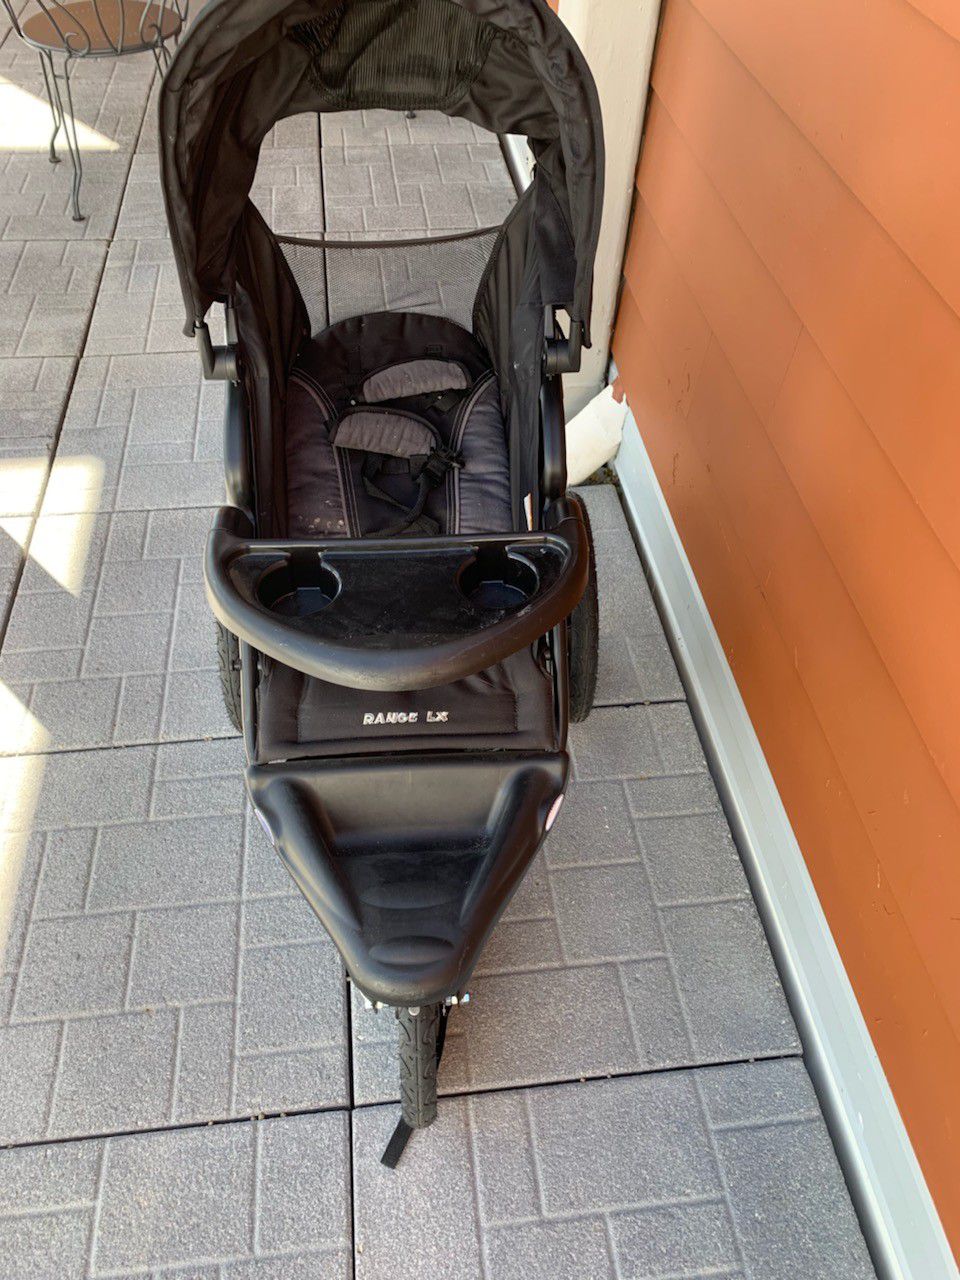 Baby Trend Ranger Xl Jogging Stroller